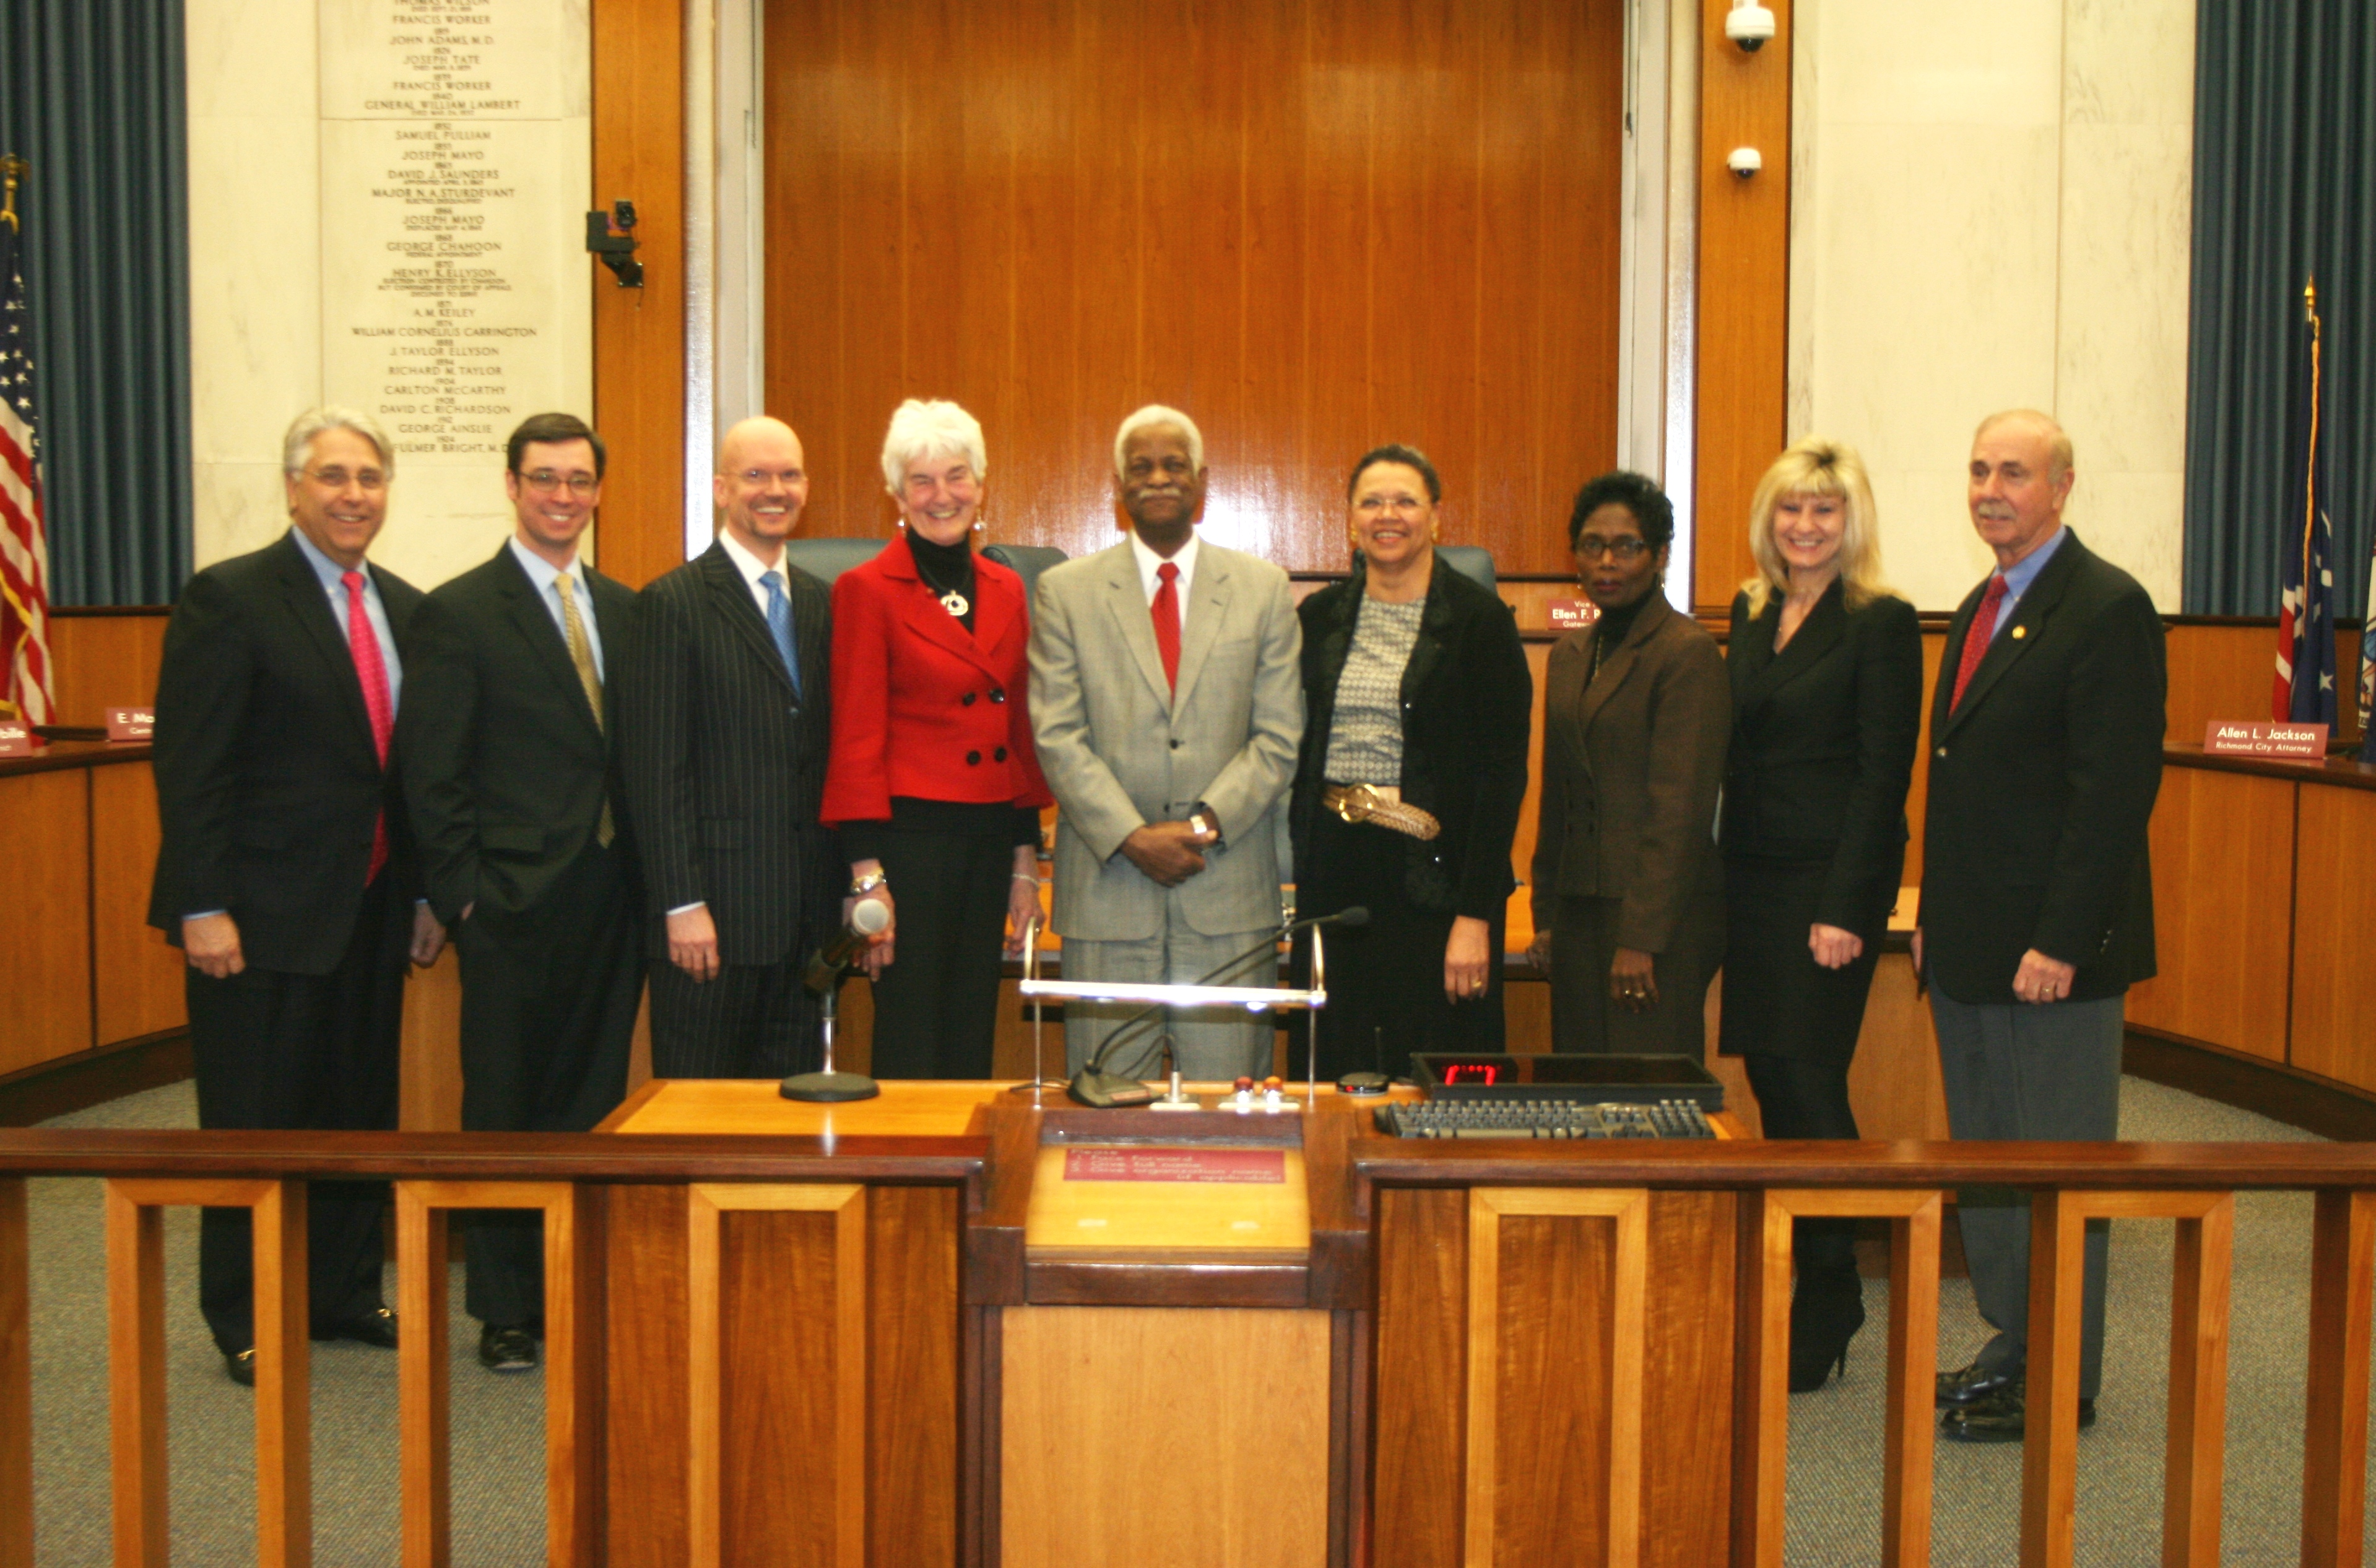 2012 photo of a Richmond City Council members.